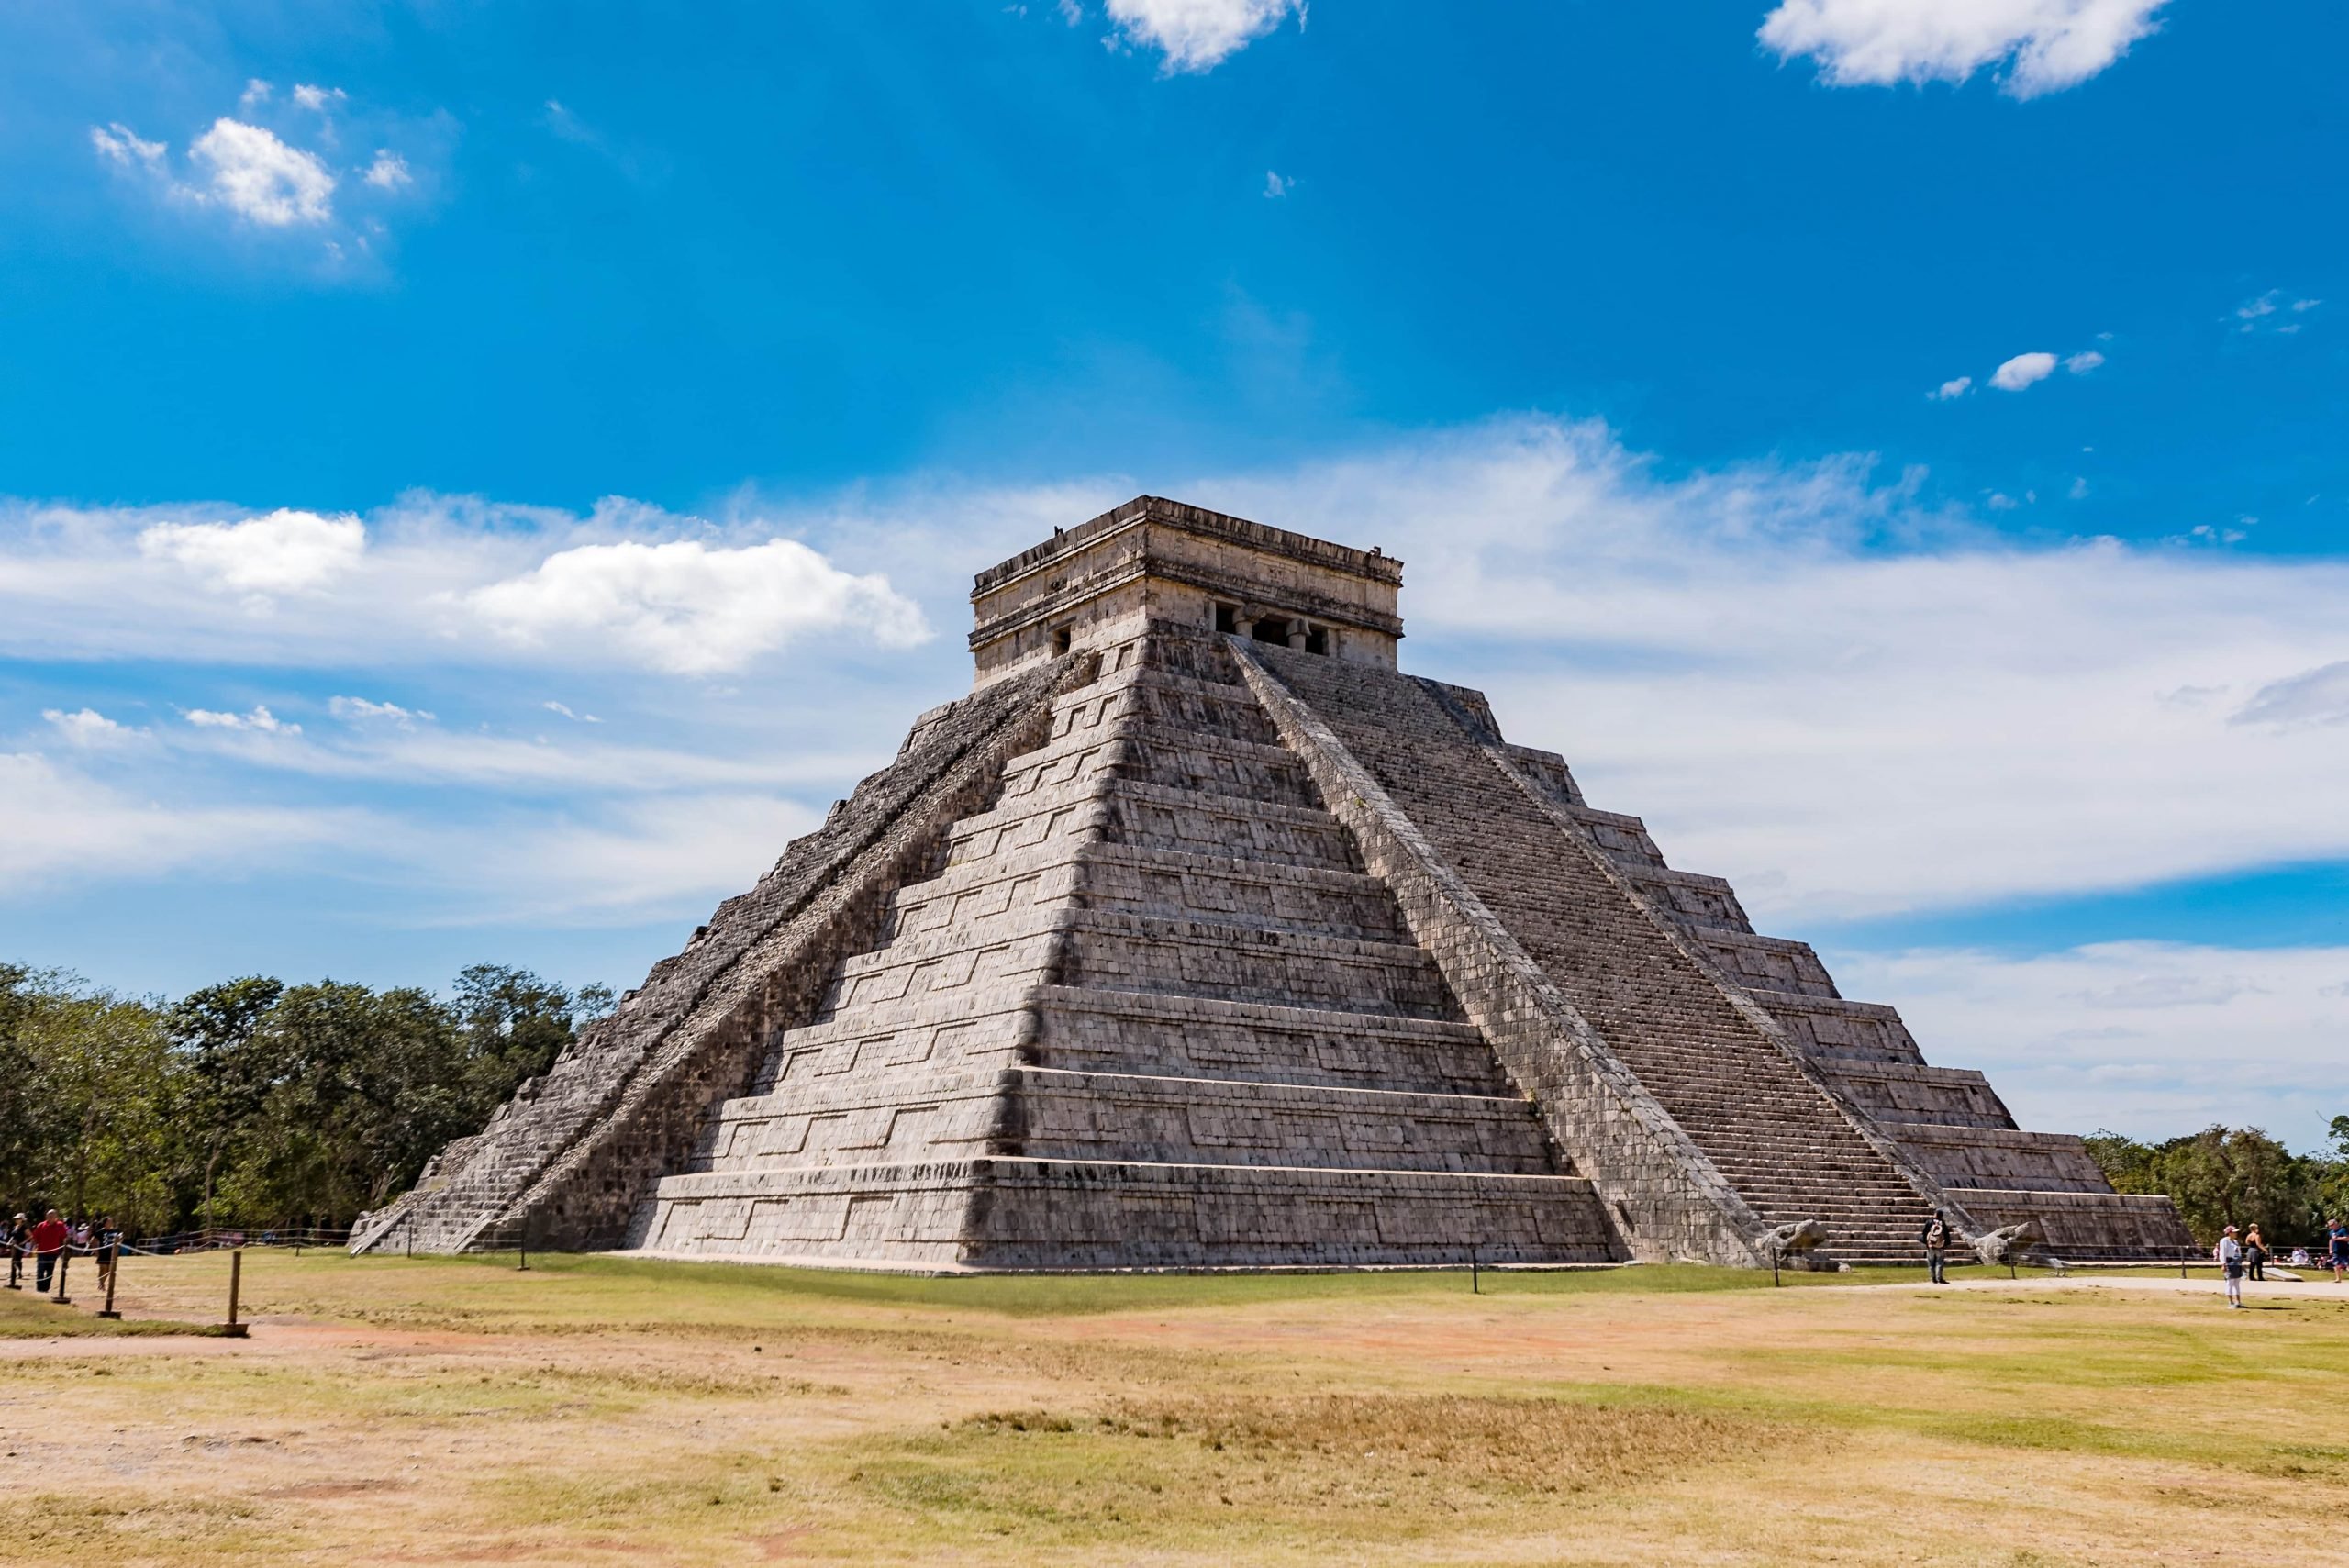 tour pyramids in mexico